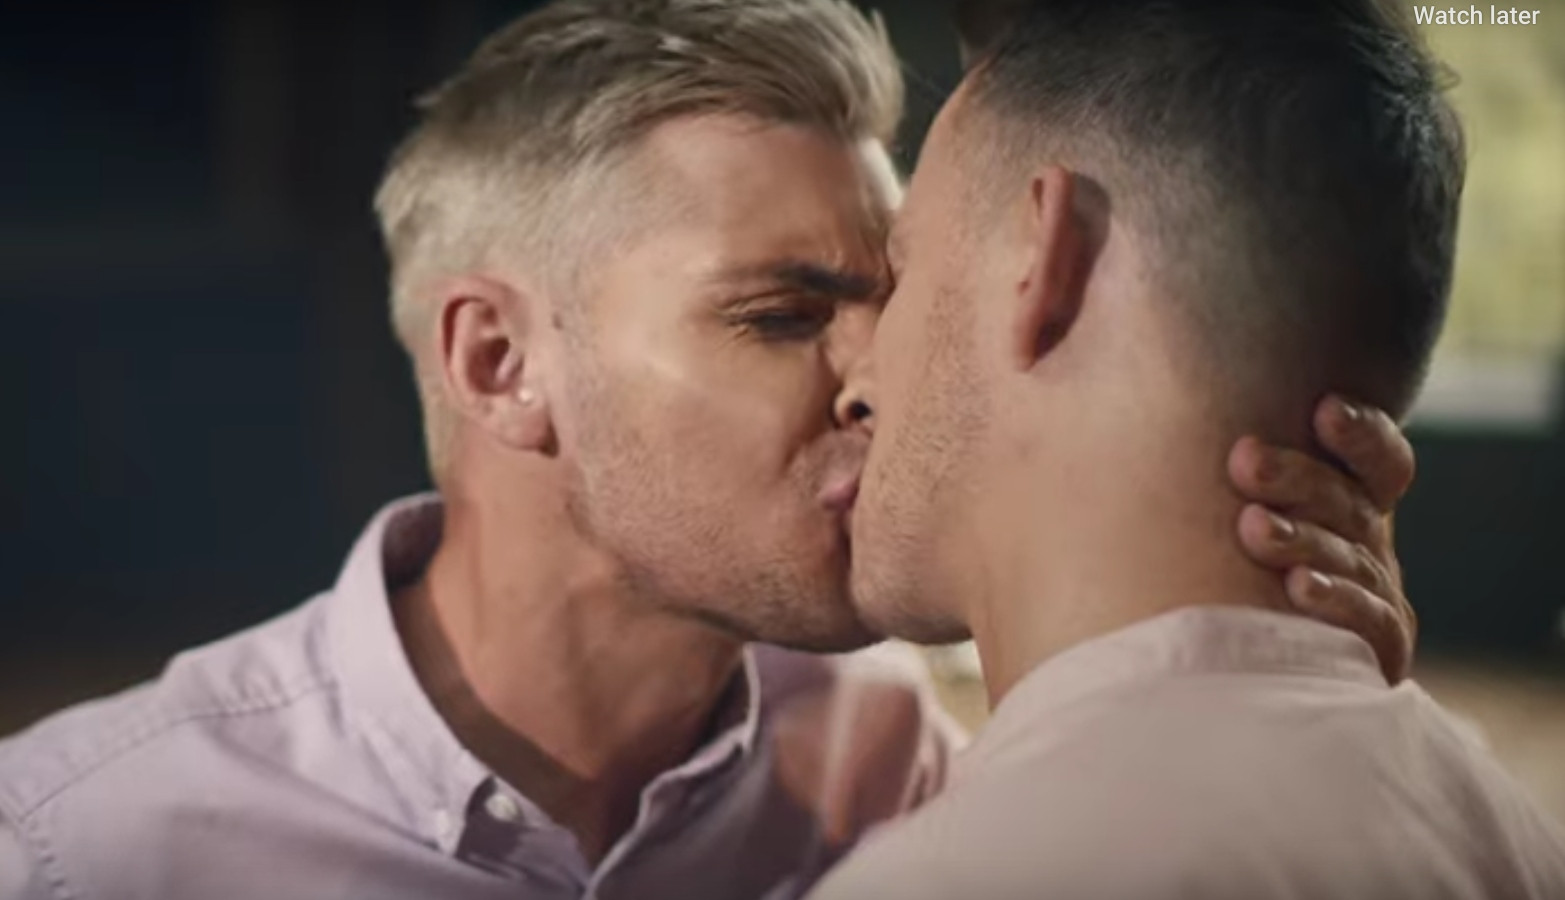 gay men kissing.